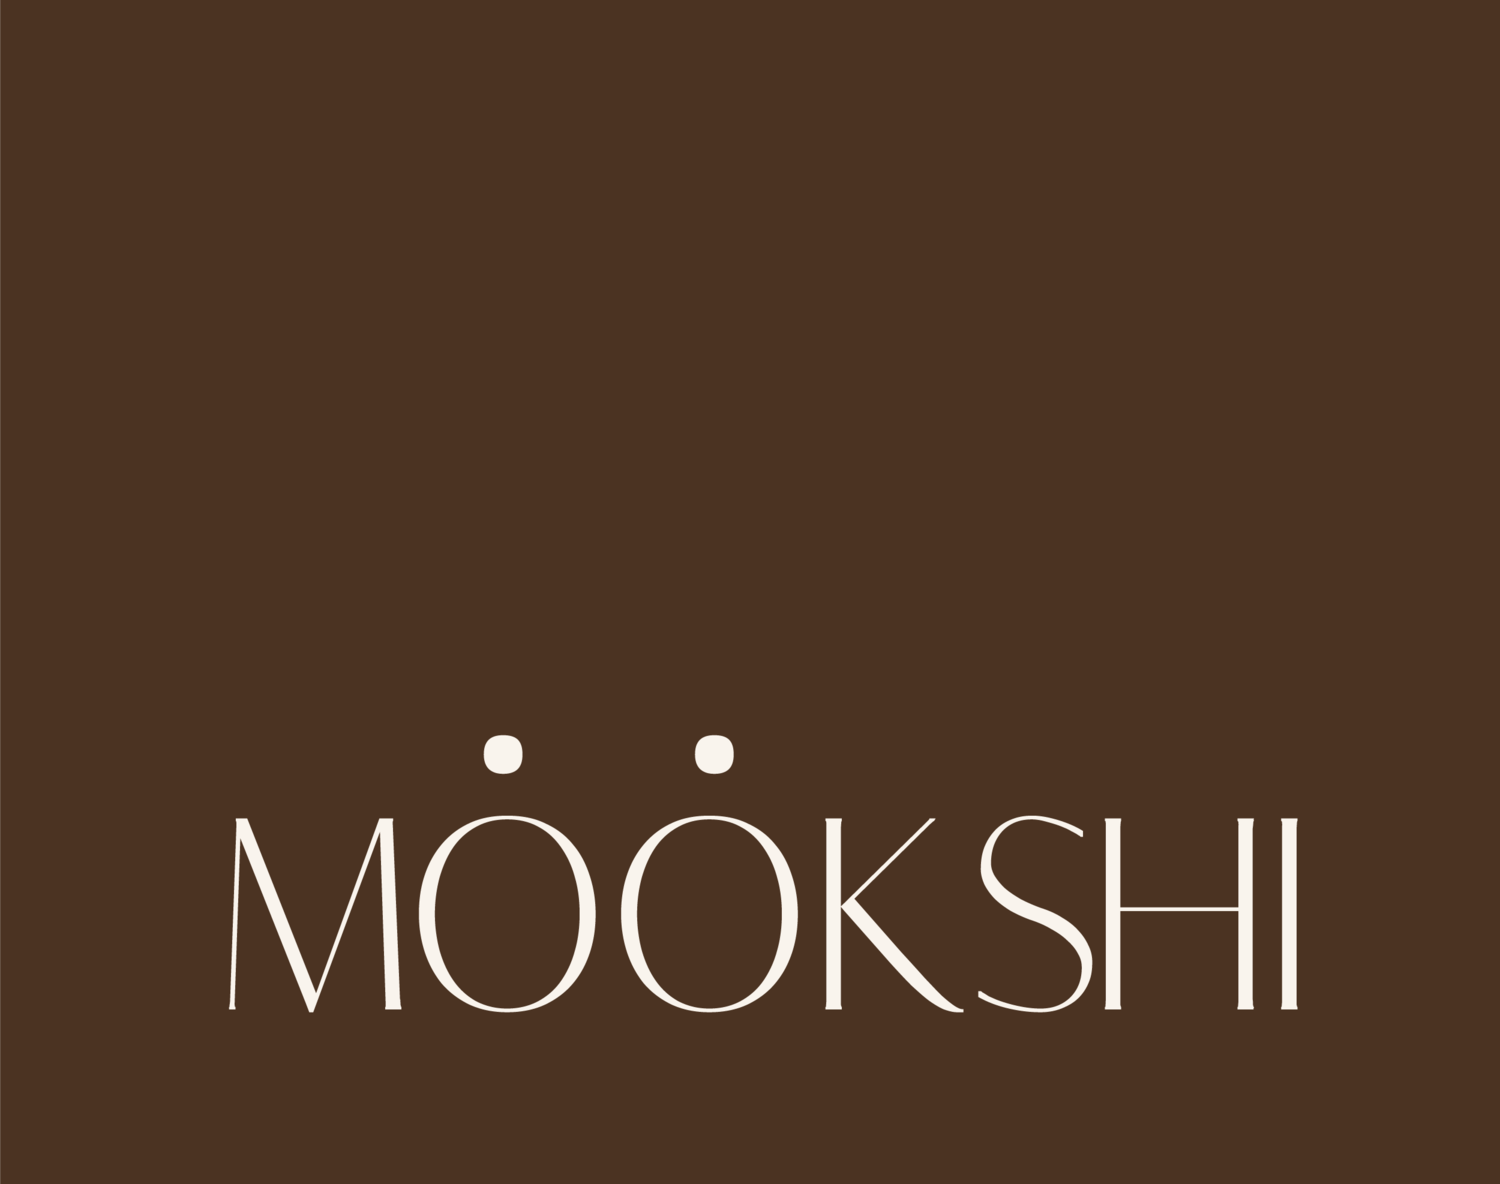 Mookshi Healing Arts Center